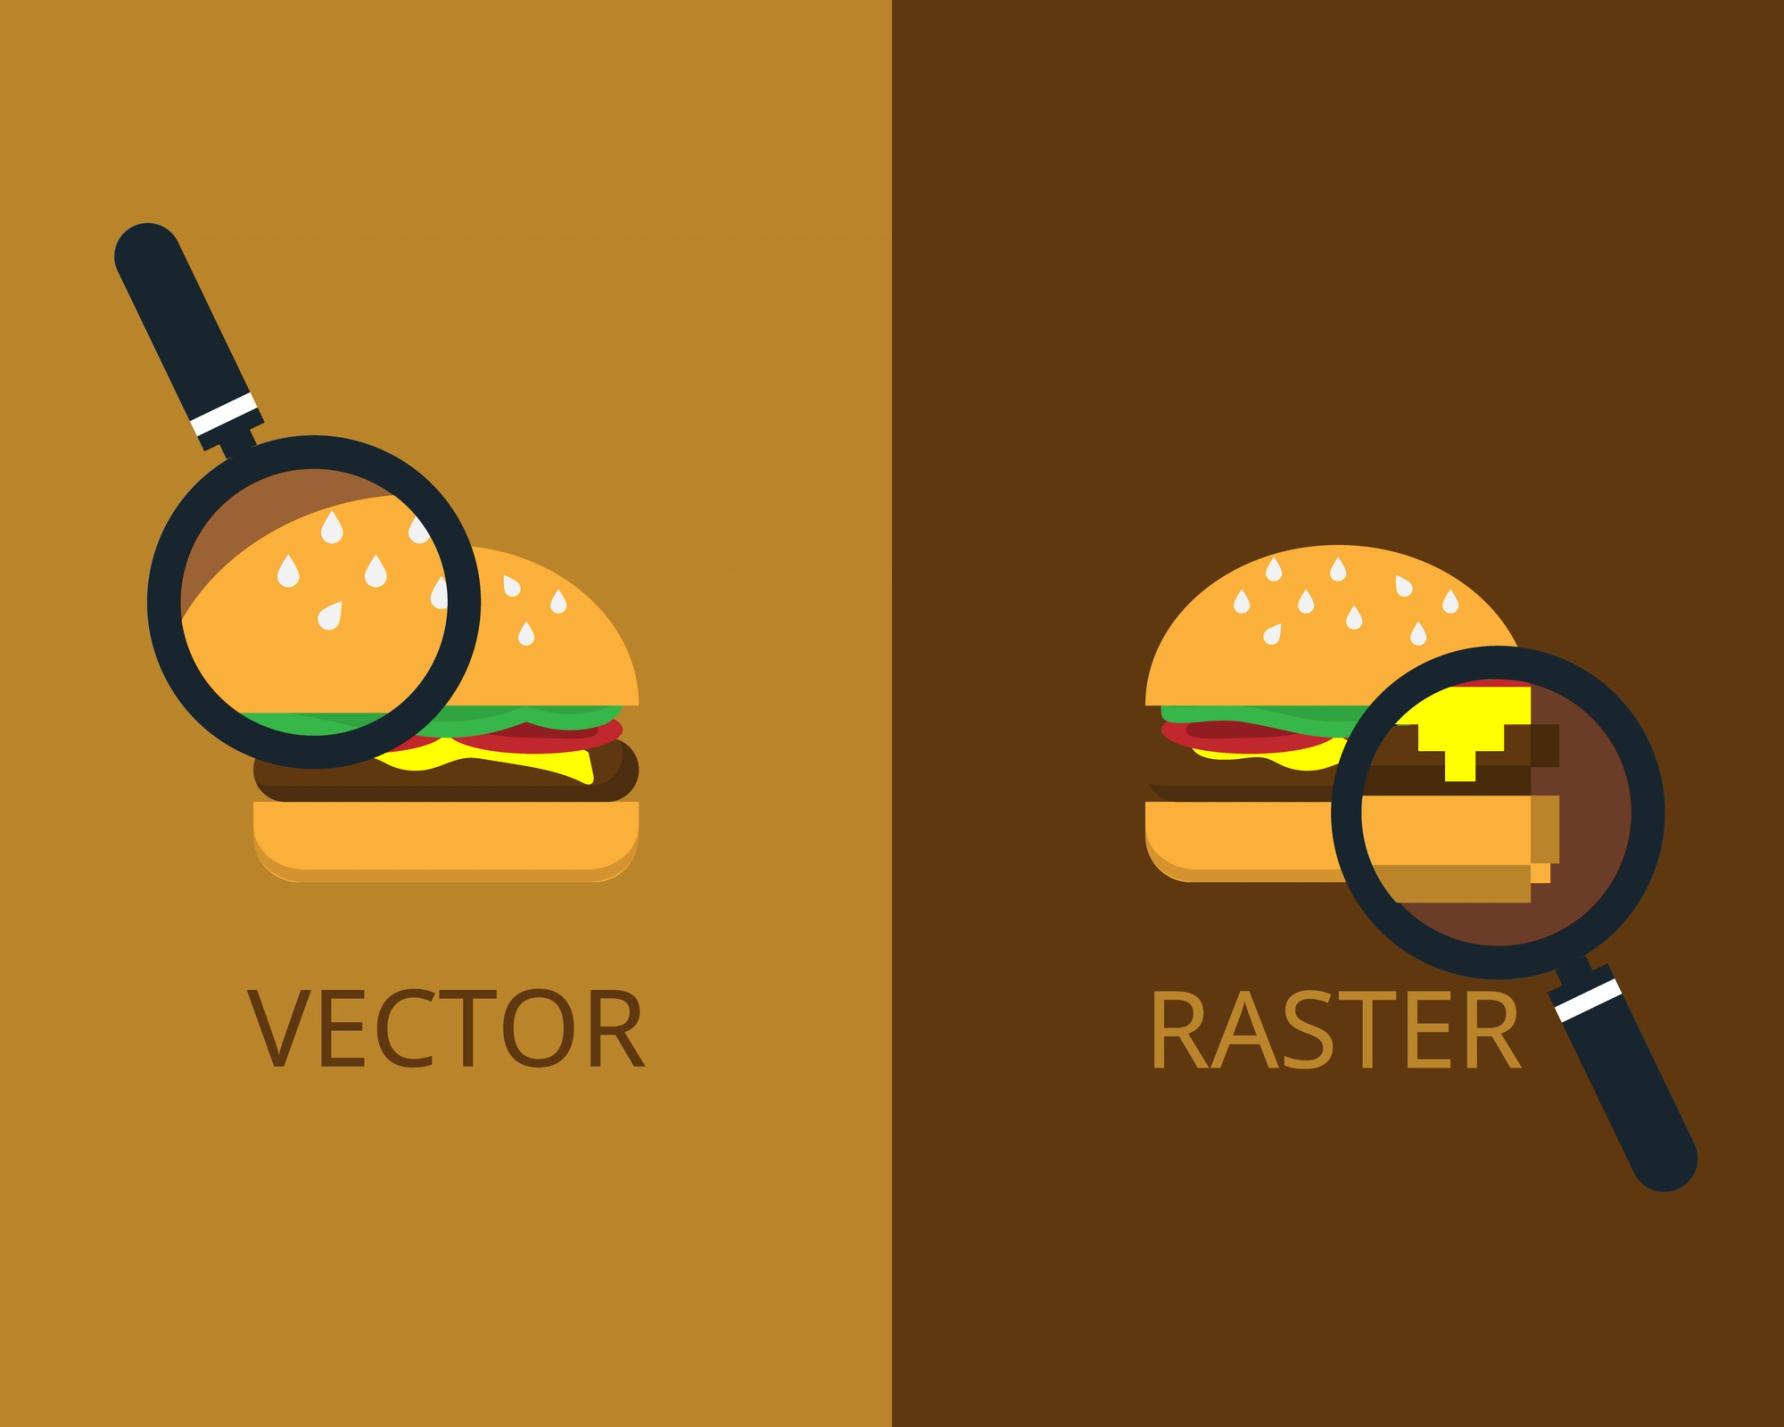 Vector vs. raster graphics